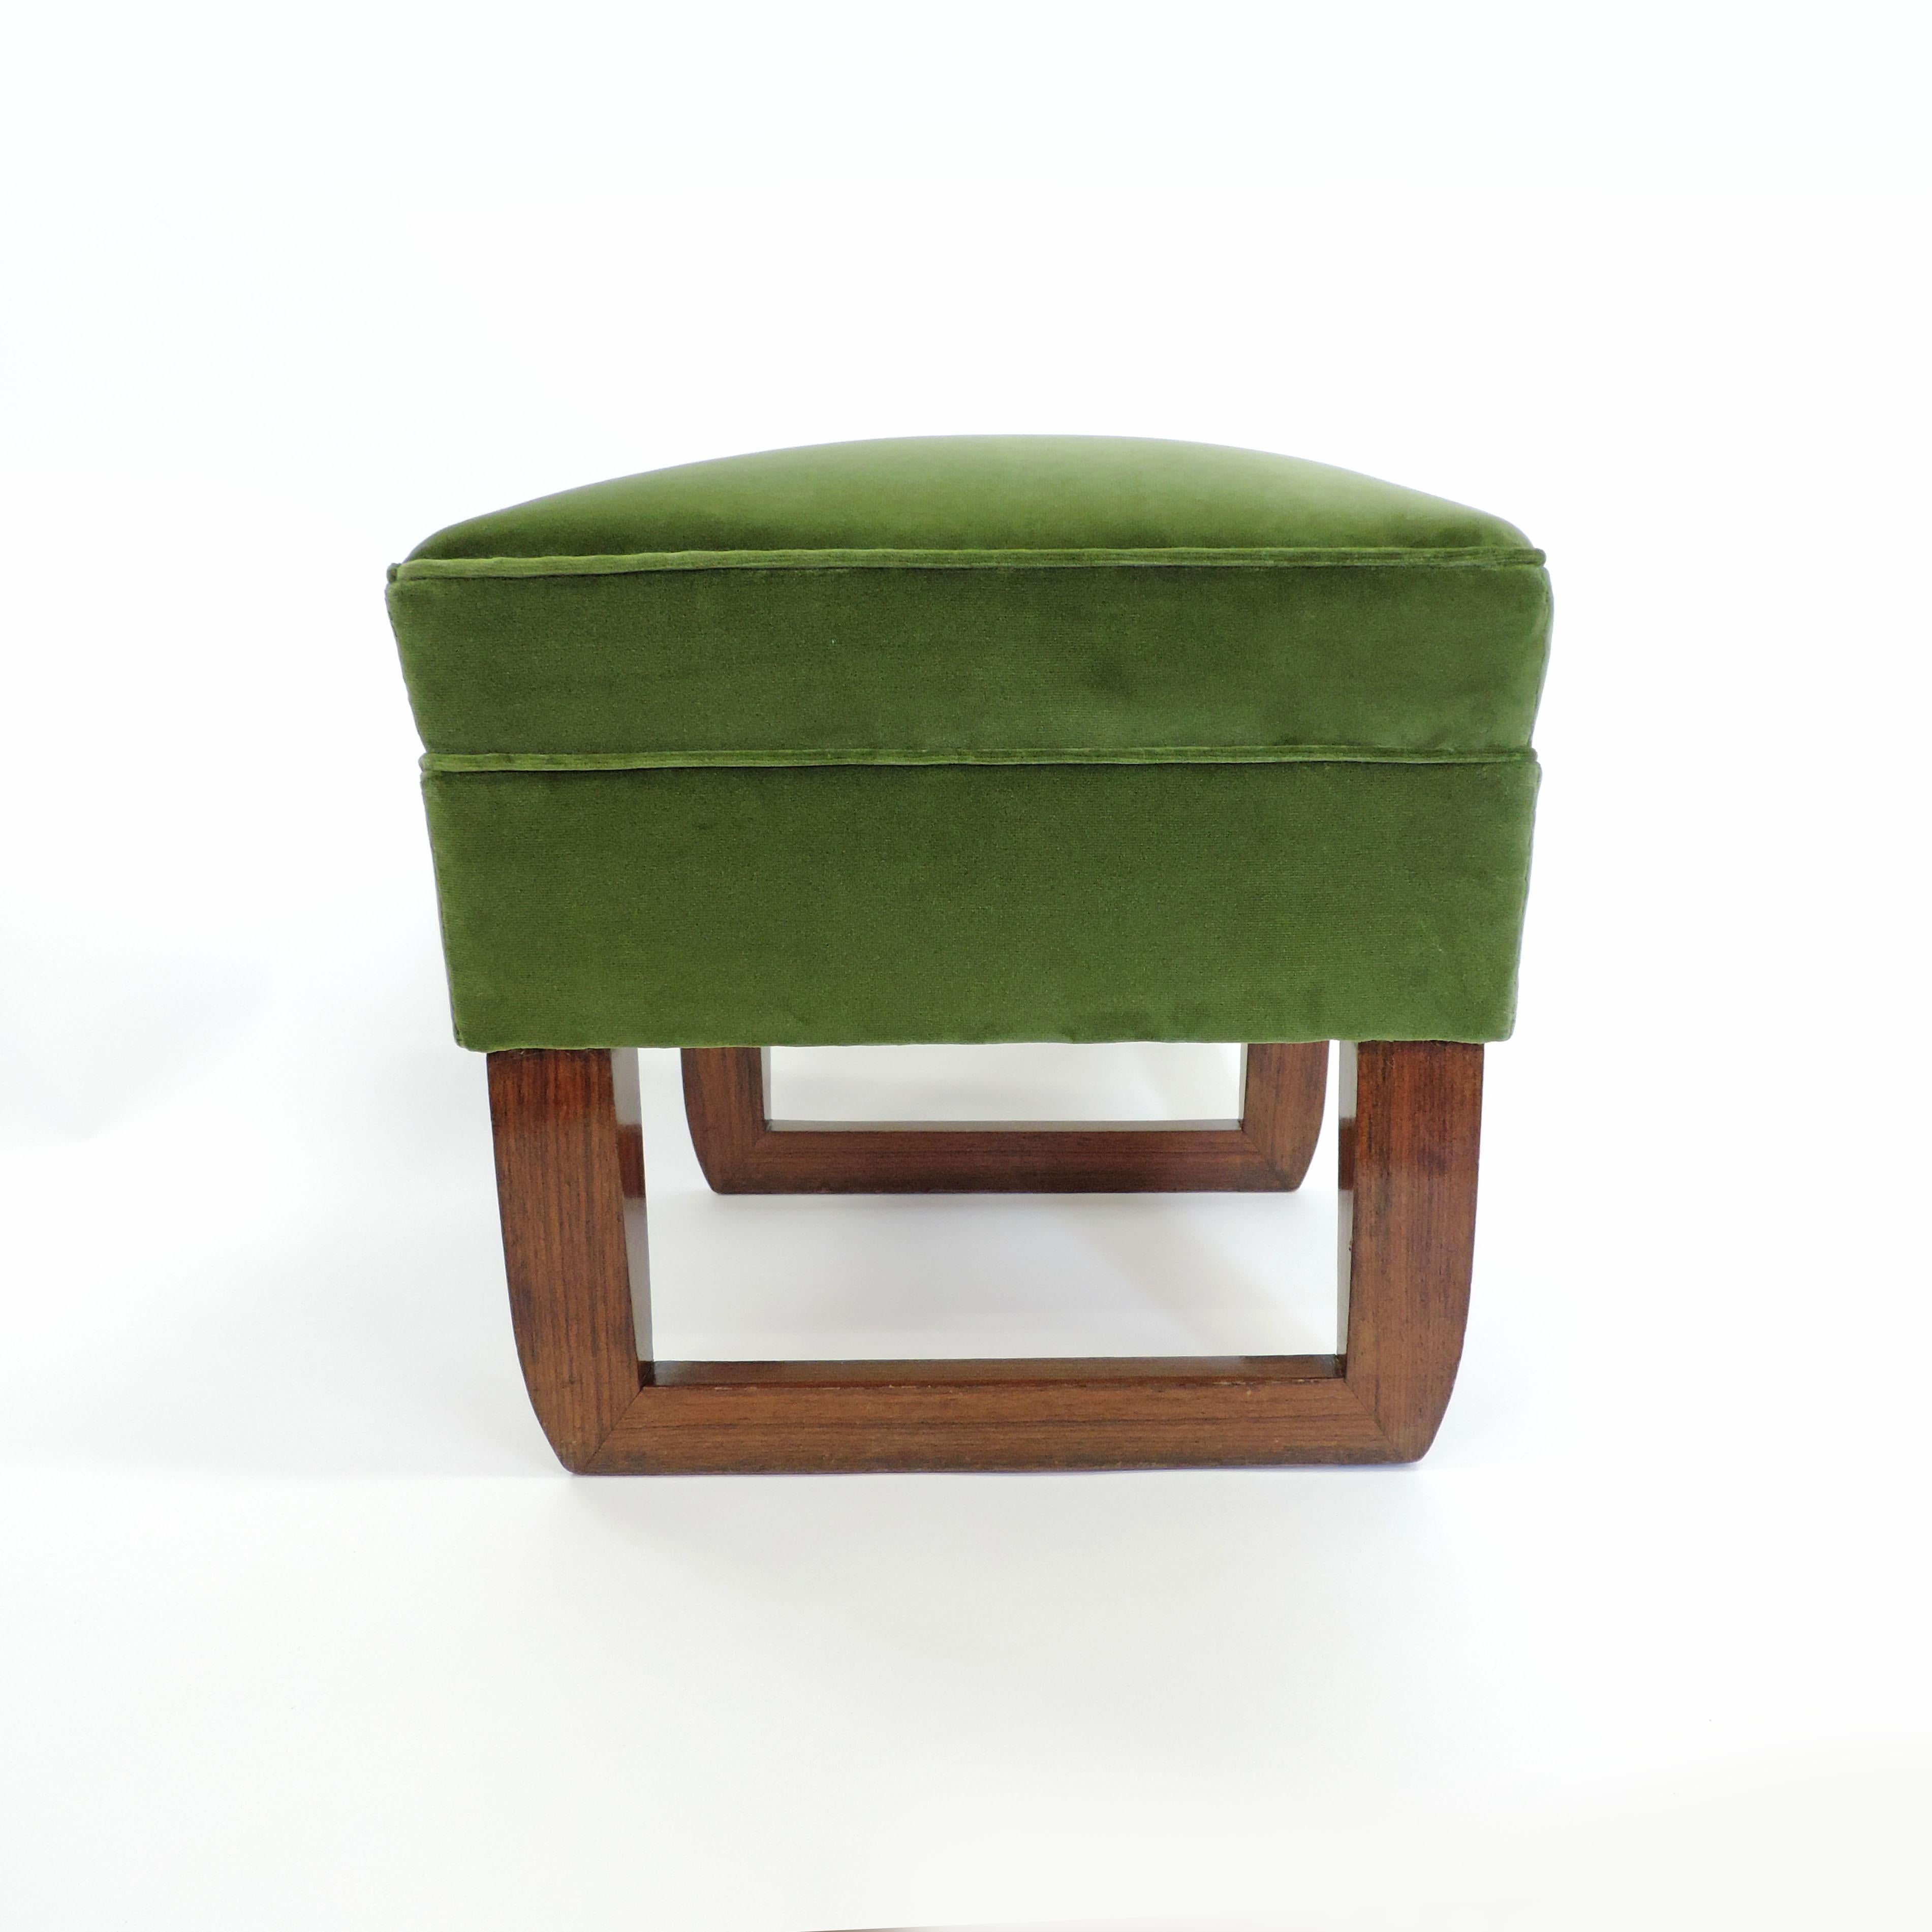 1930s Italian pair of modernist stools.